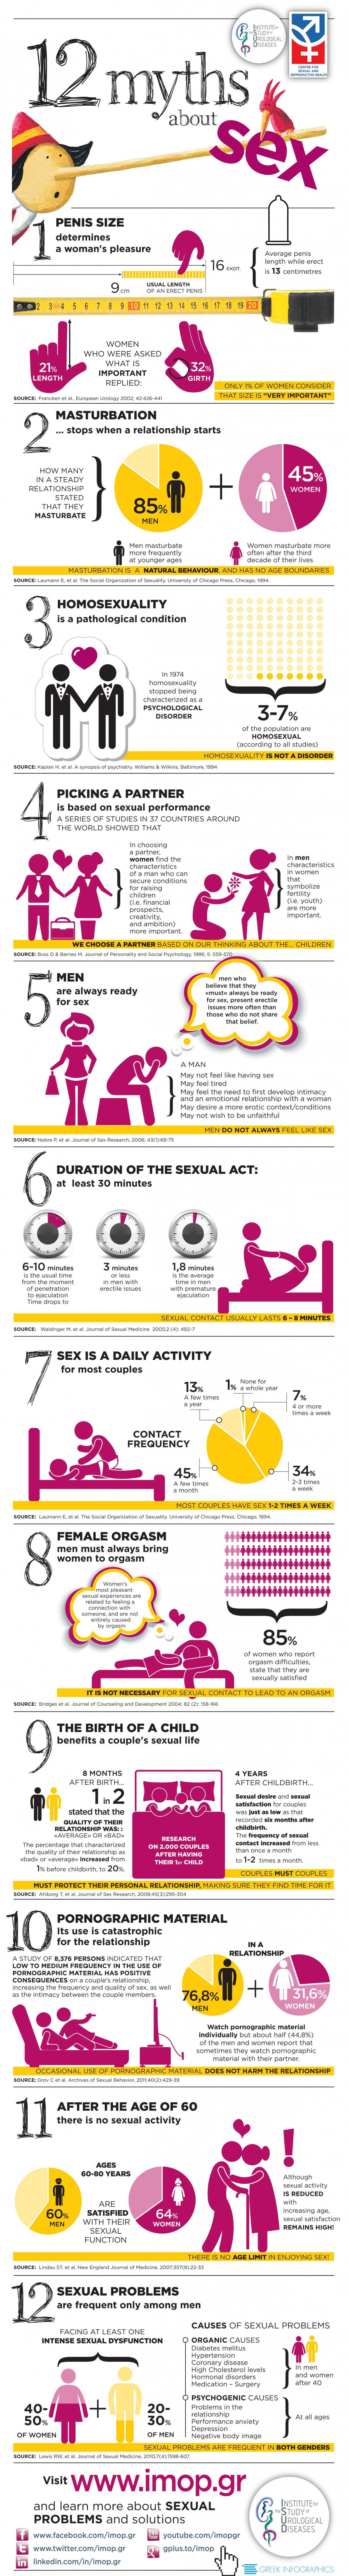 12 Myths About Sex